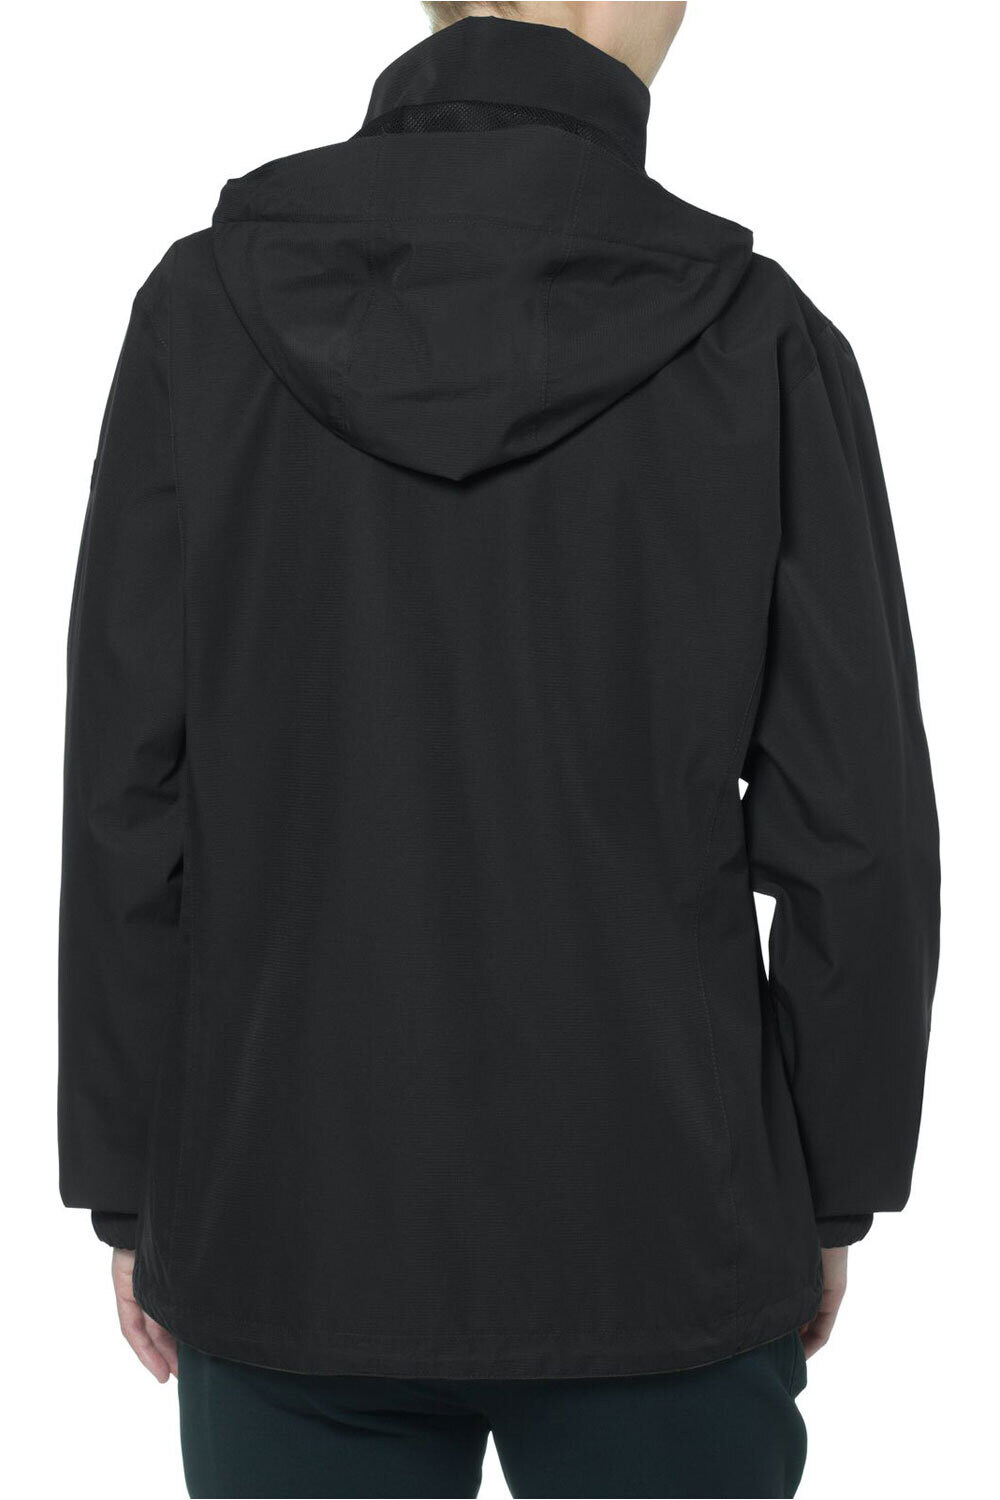 Vaude chaqueta impermeable mujer Women's Escape Light Jacket vista trasera